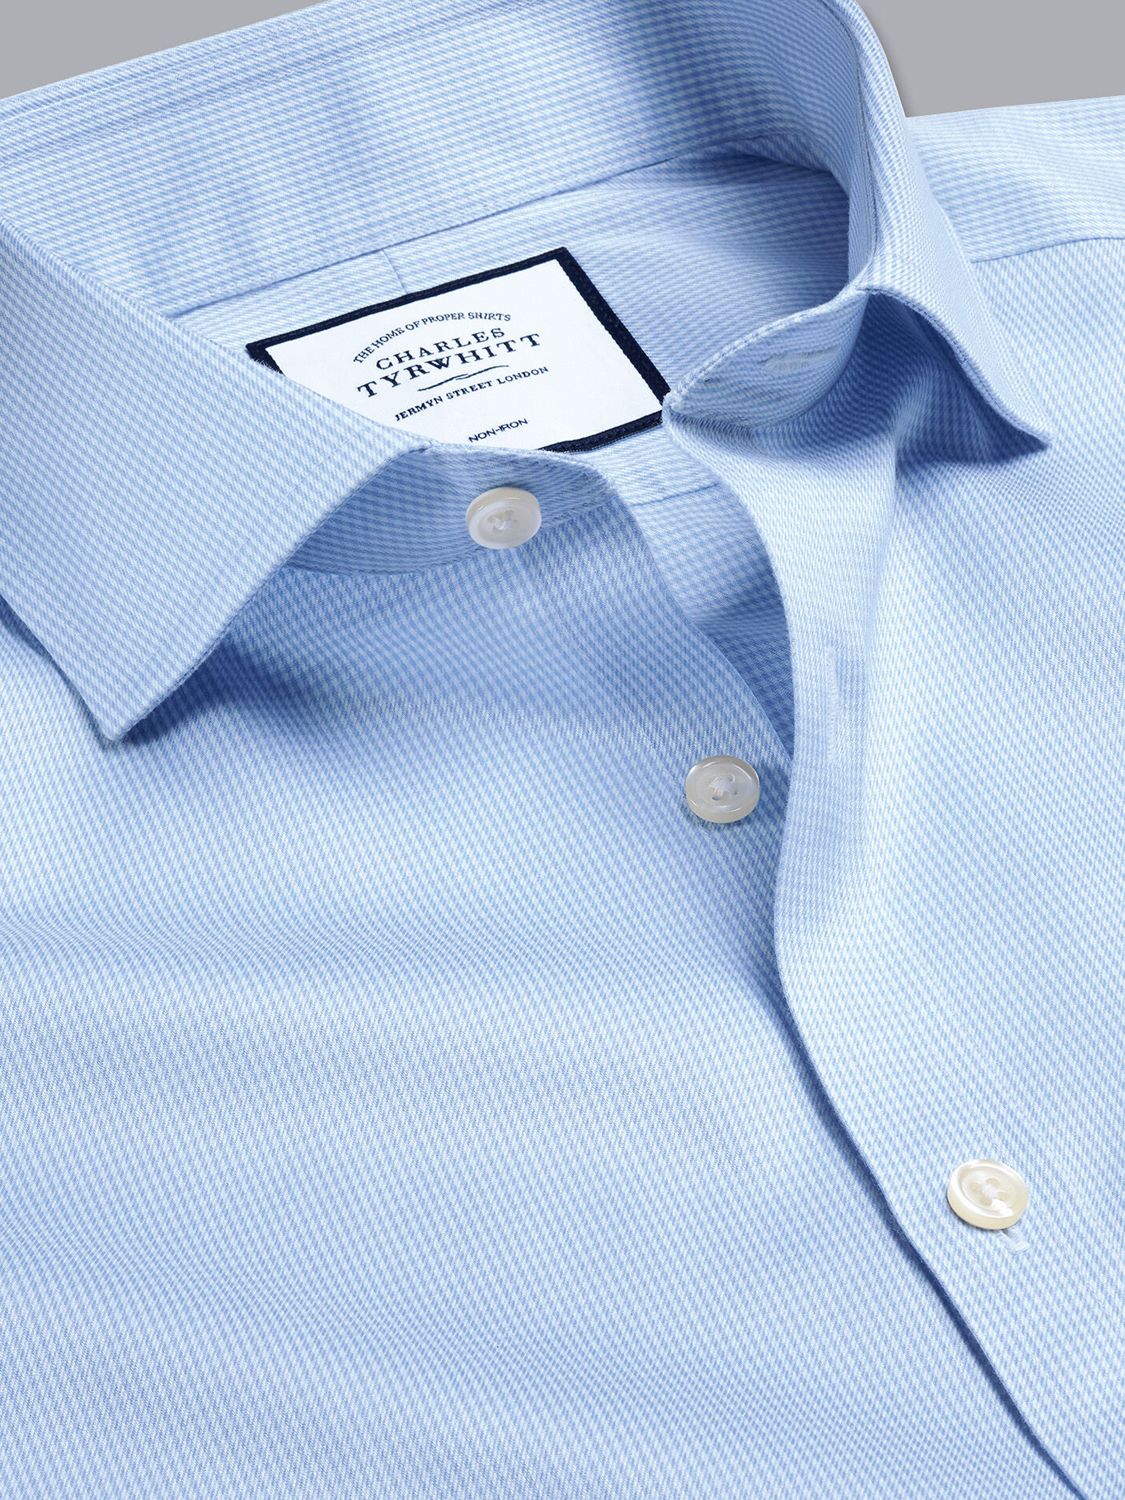 Charles Tyrwhitt Cutaway Collar Non-Iron Puppytooth Slim Fit Shirt, Sky Blue, 16 33